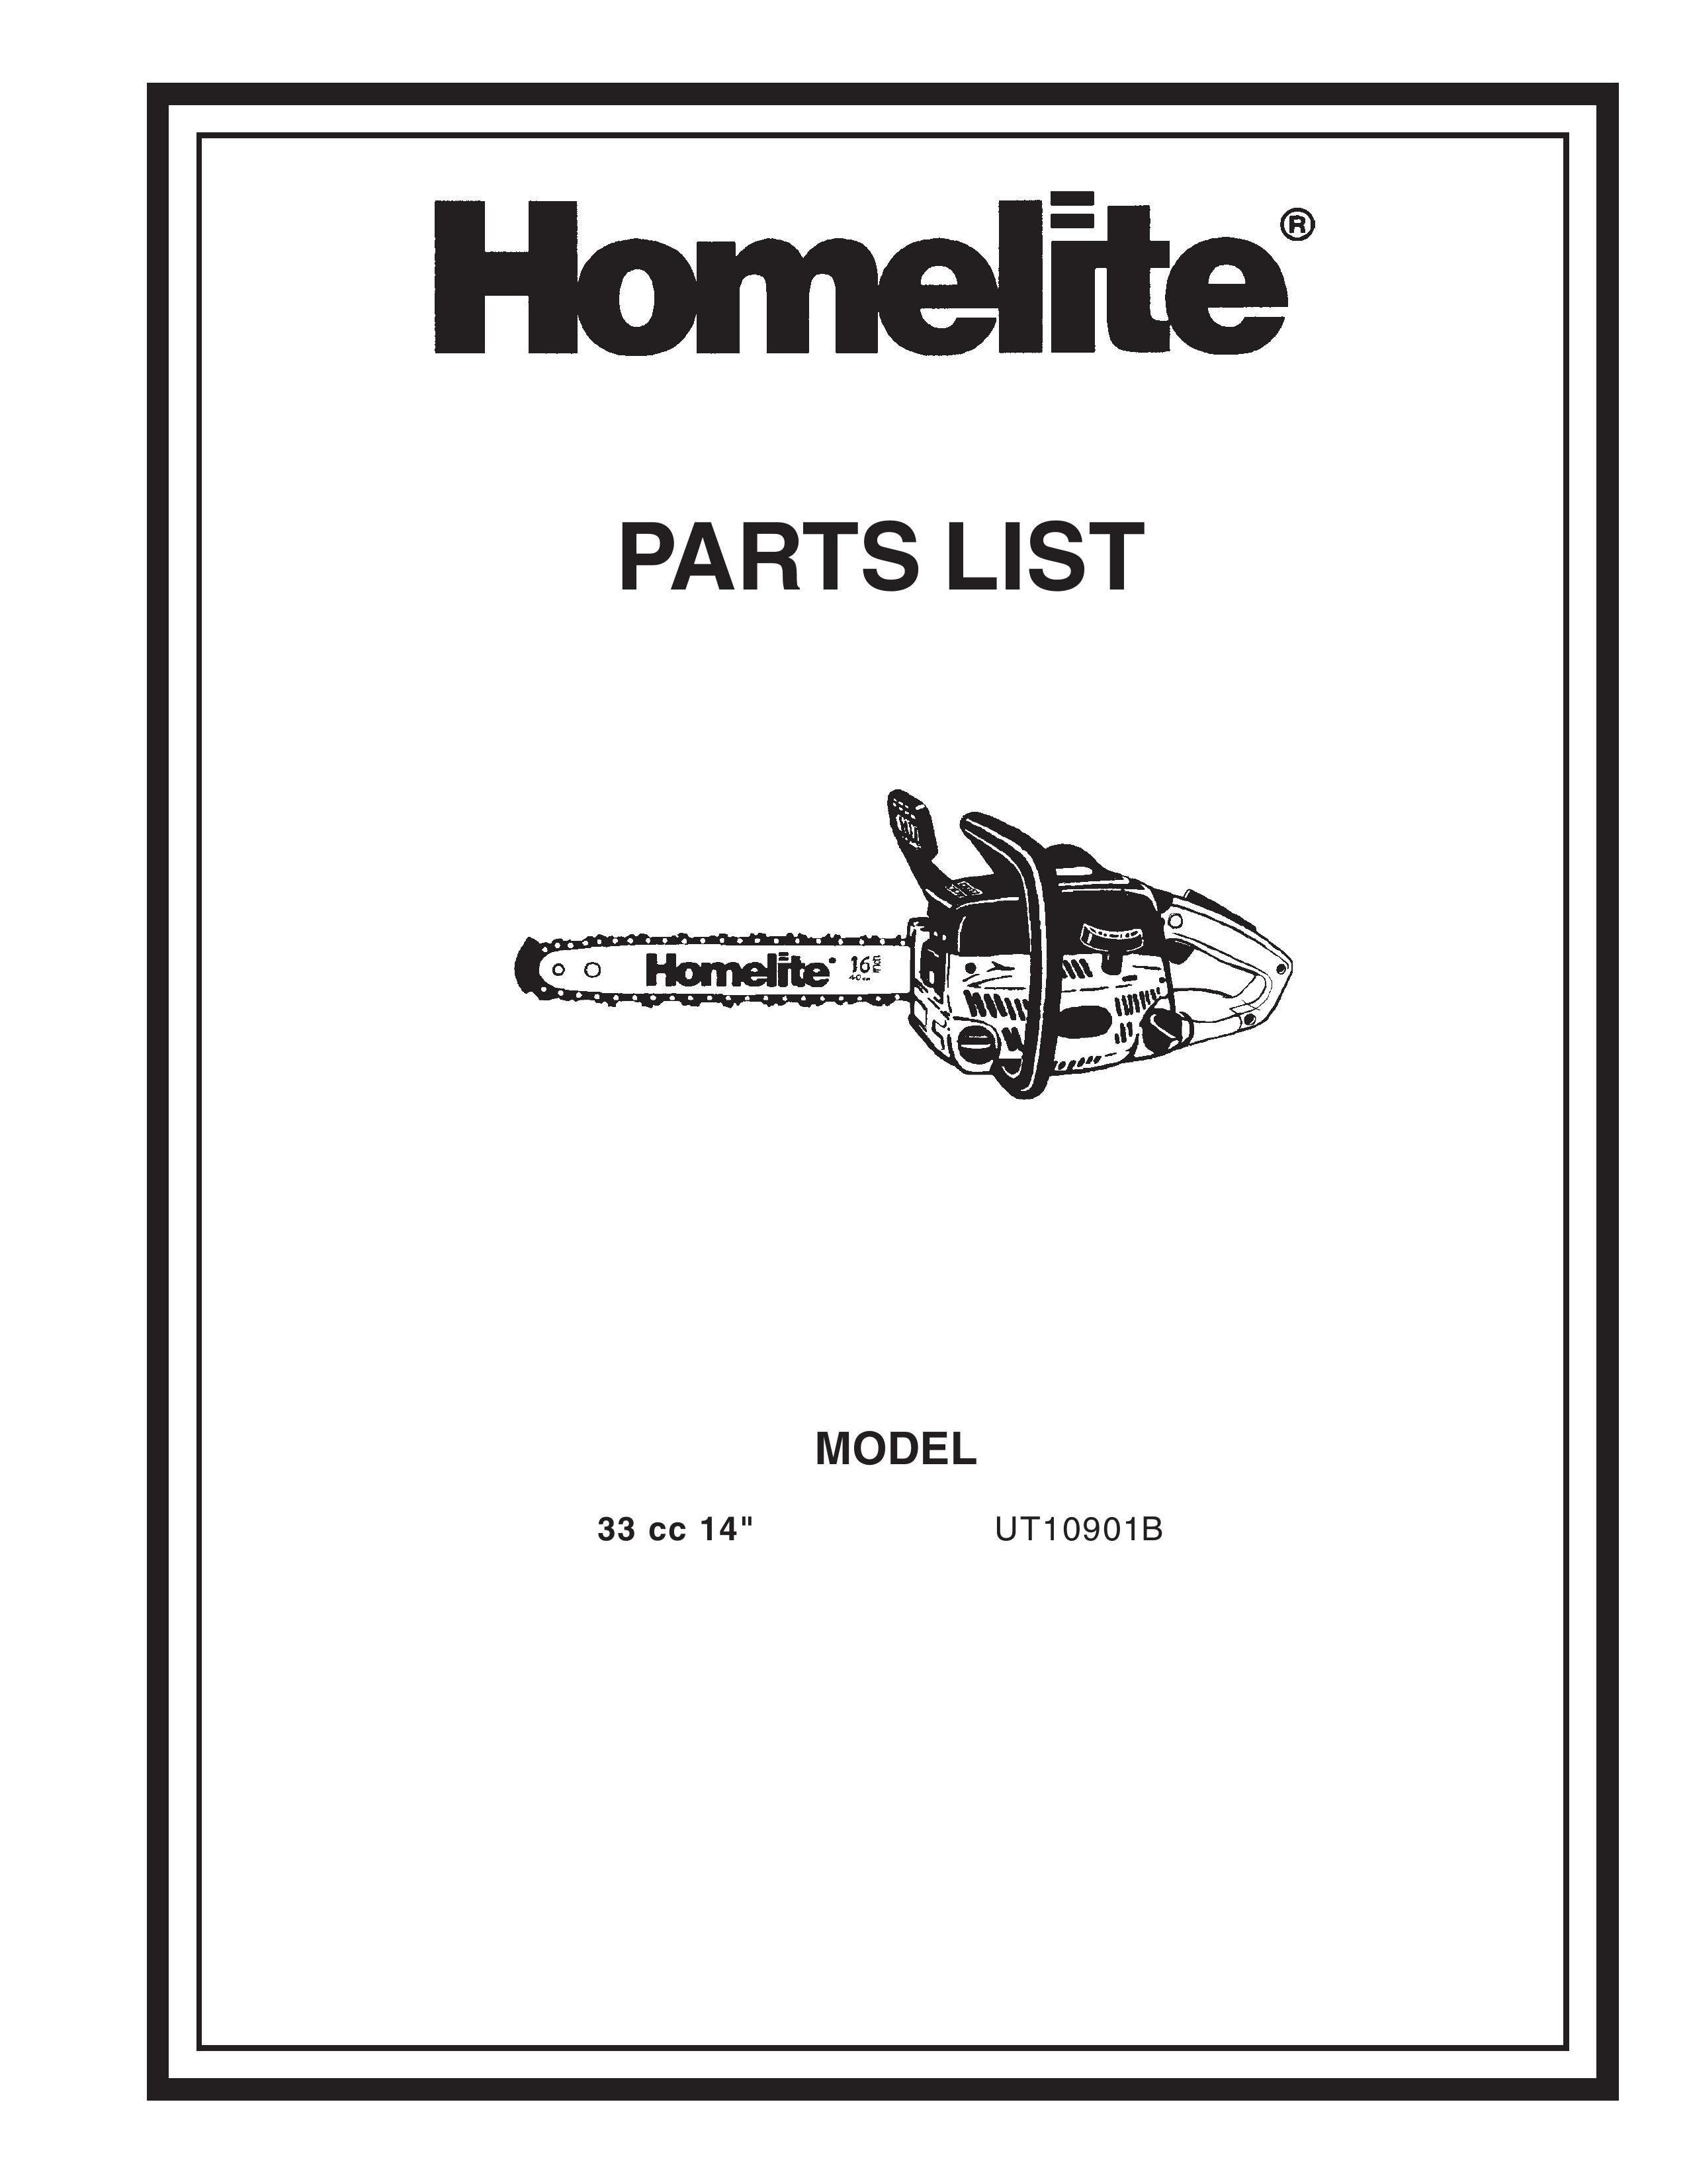 Homelite UT10901B Chainsaw User Manual